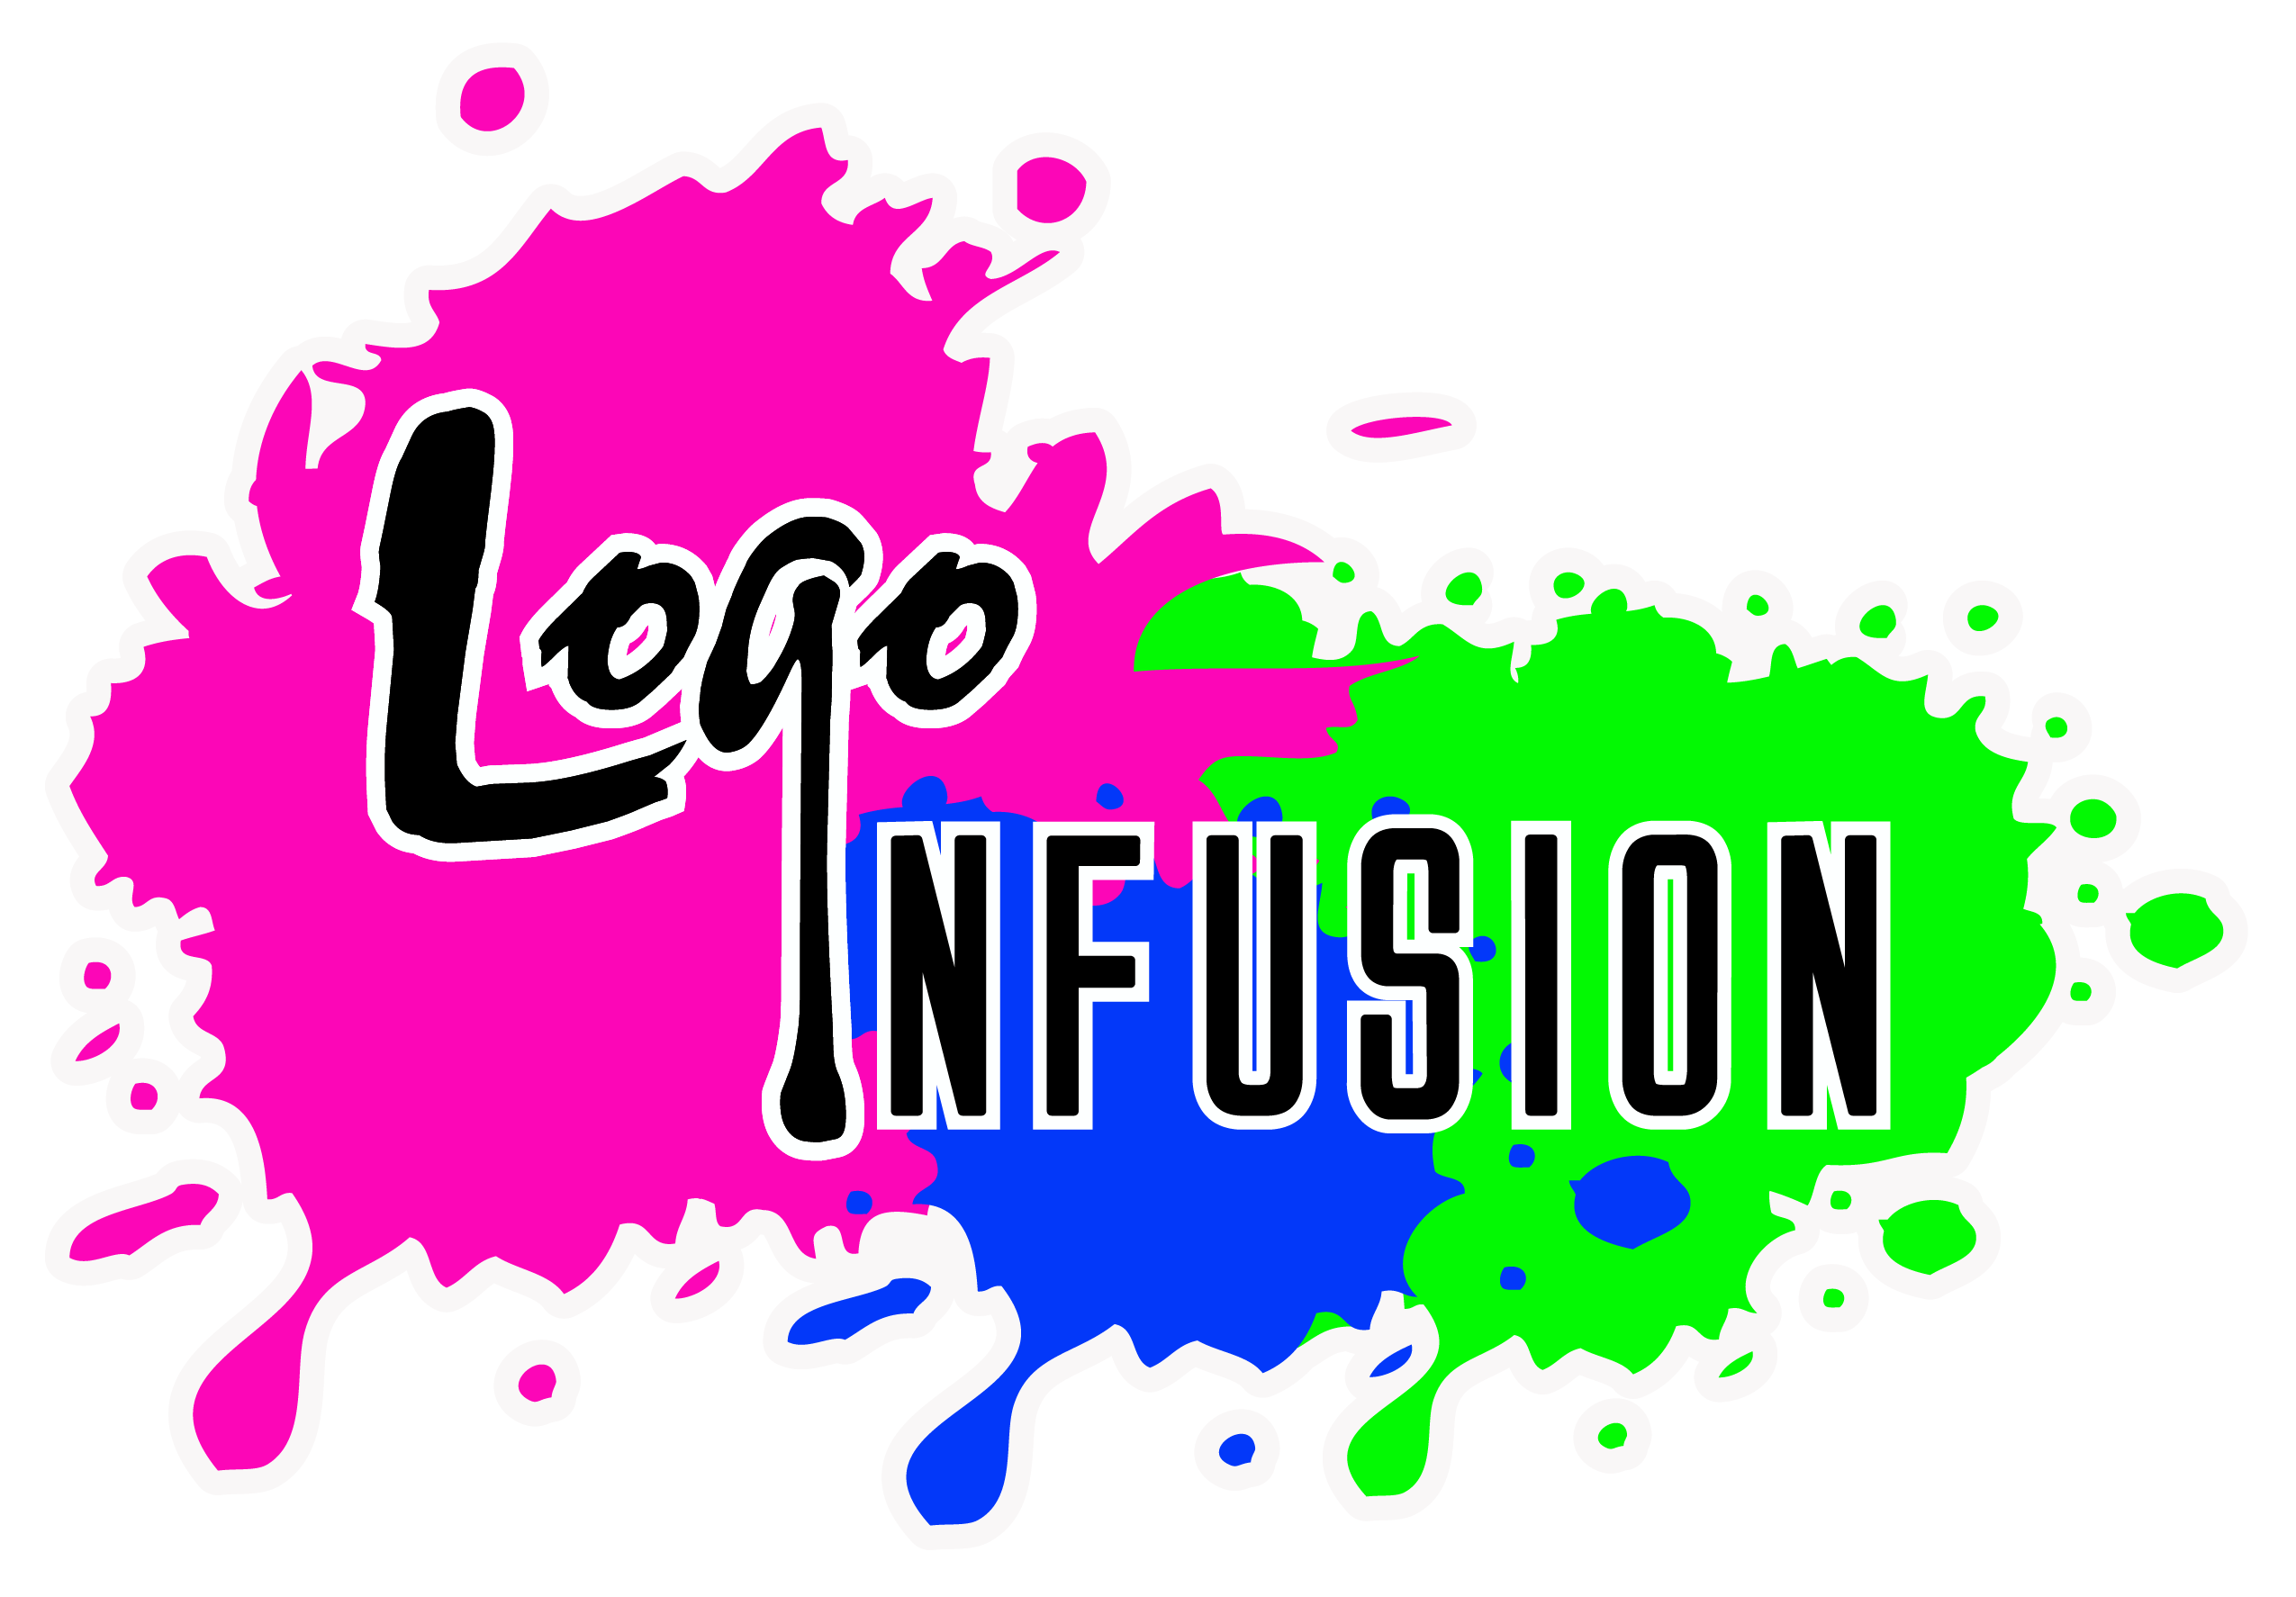  Logo Infusion Dye-Sublimated Bowling Jersey (Sash